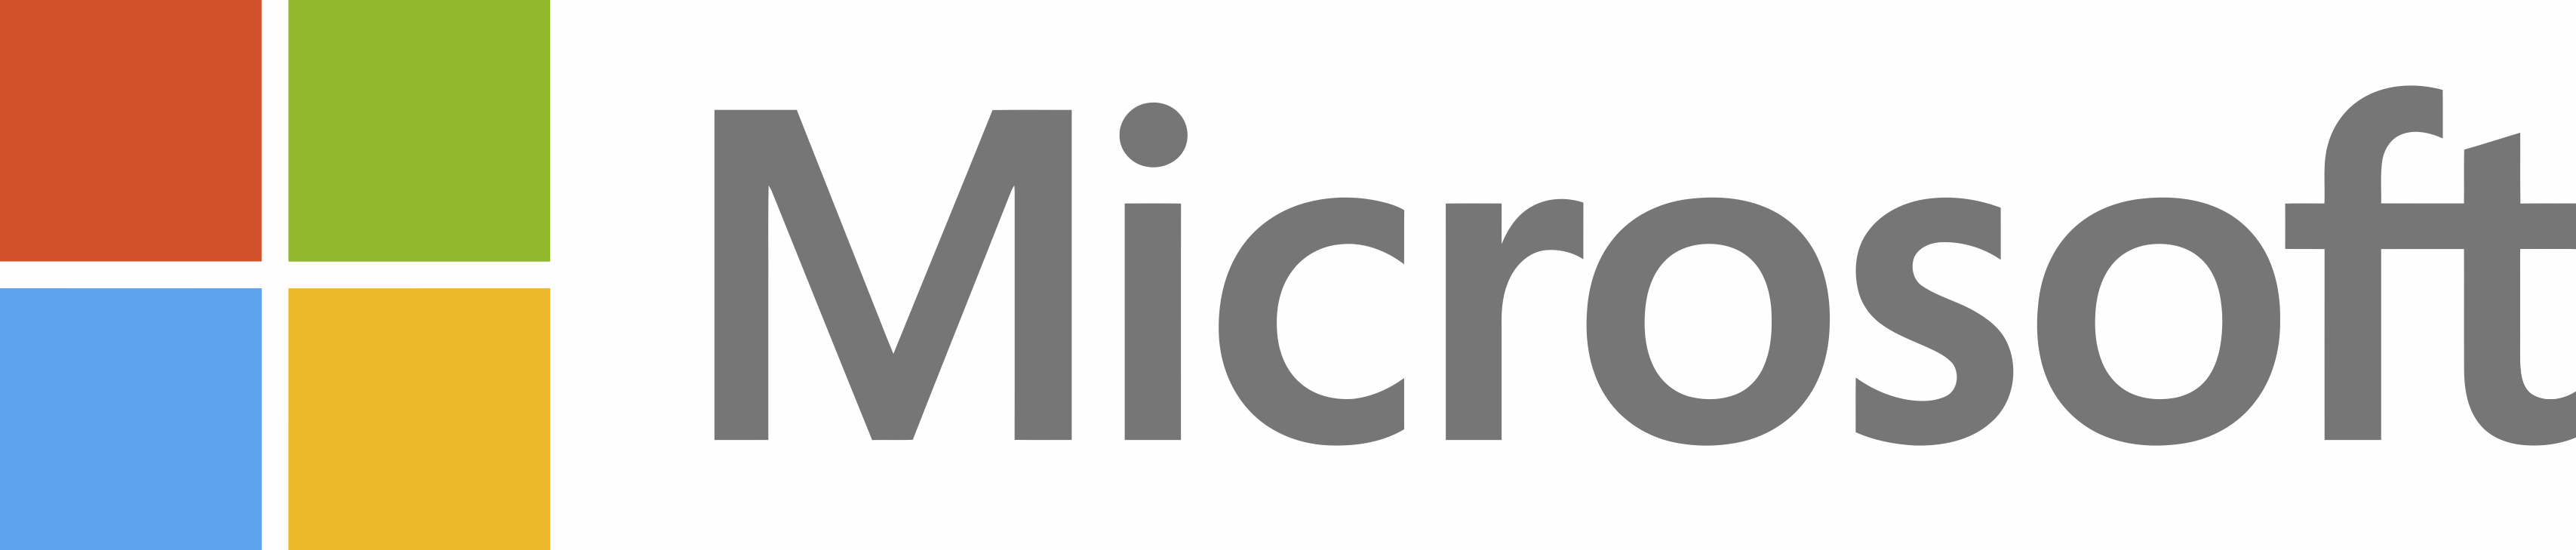 software company brand logo